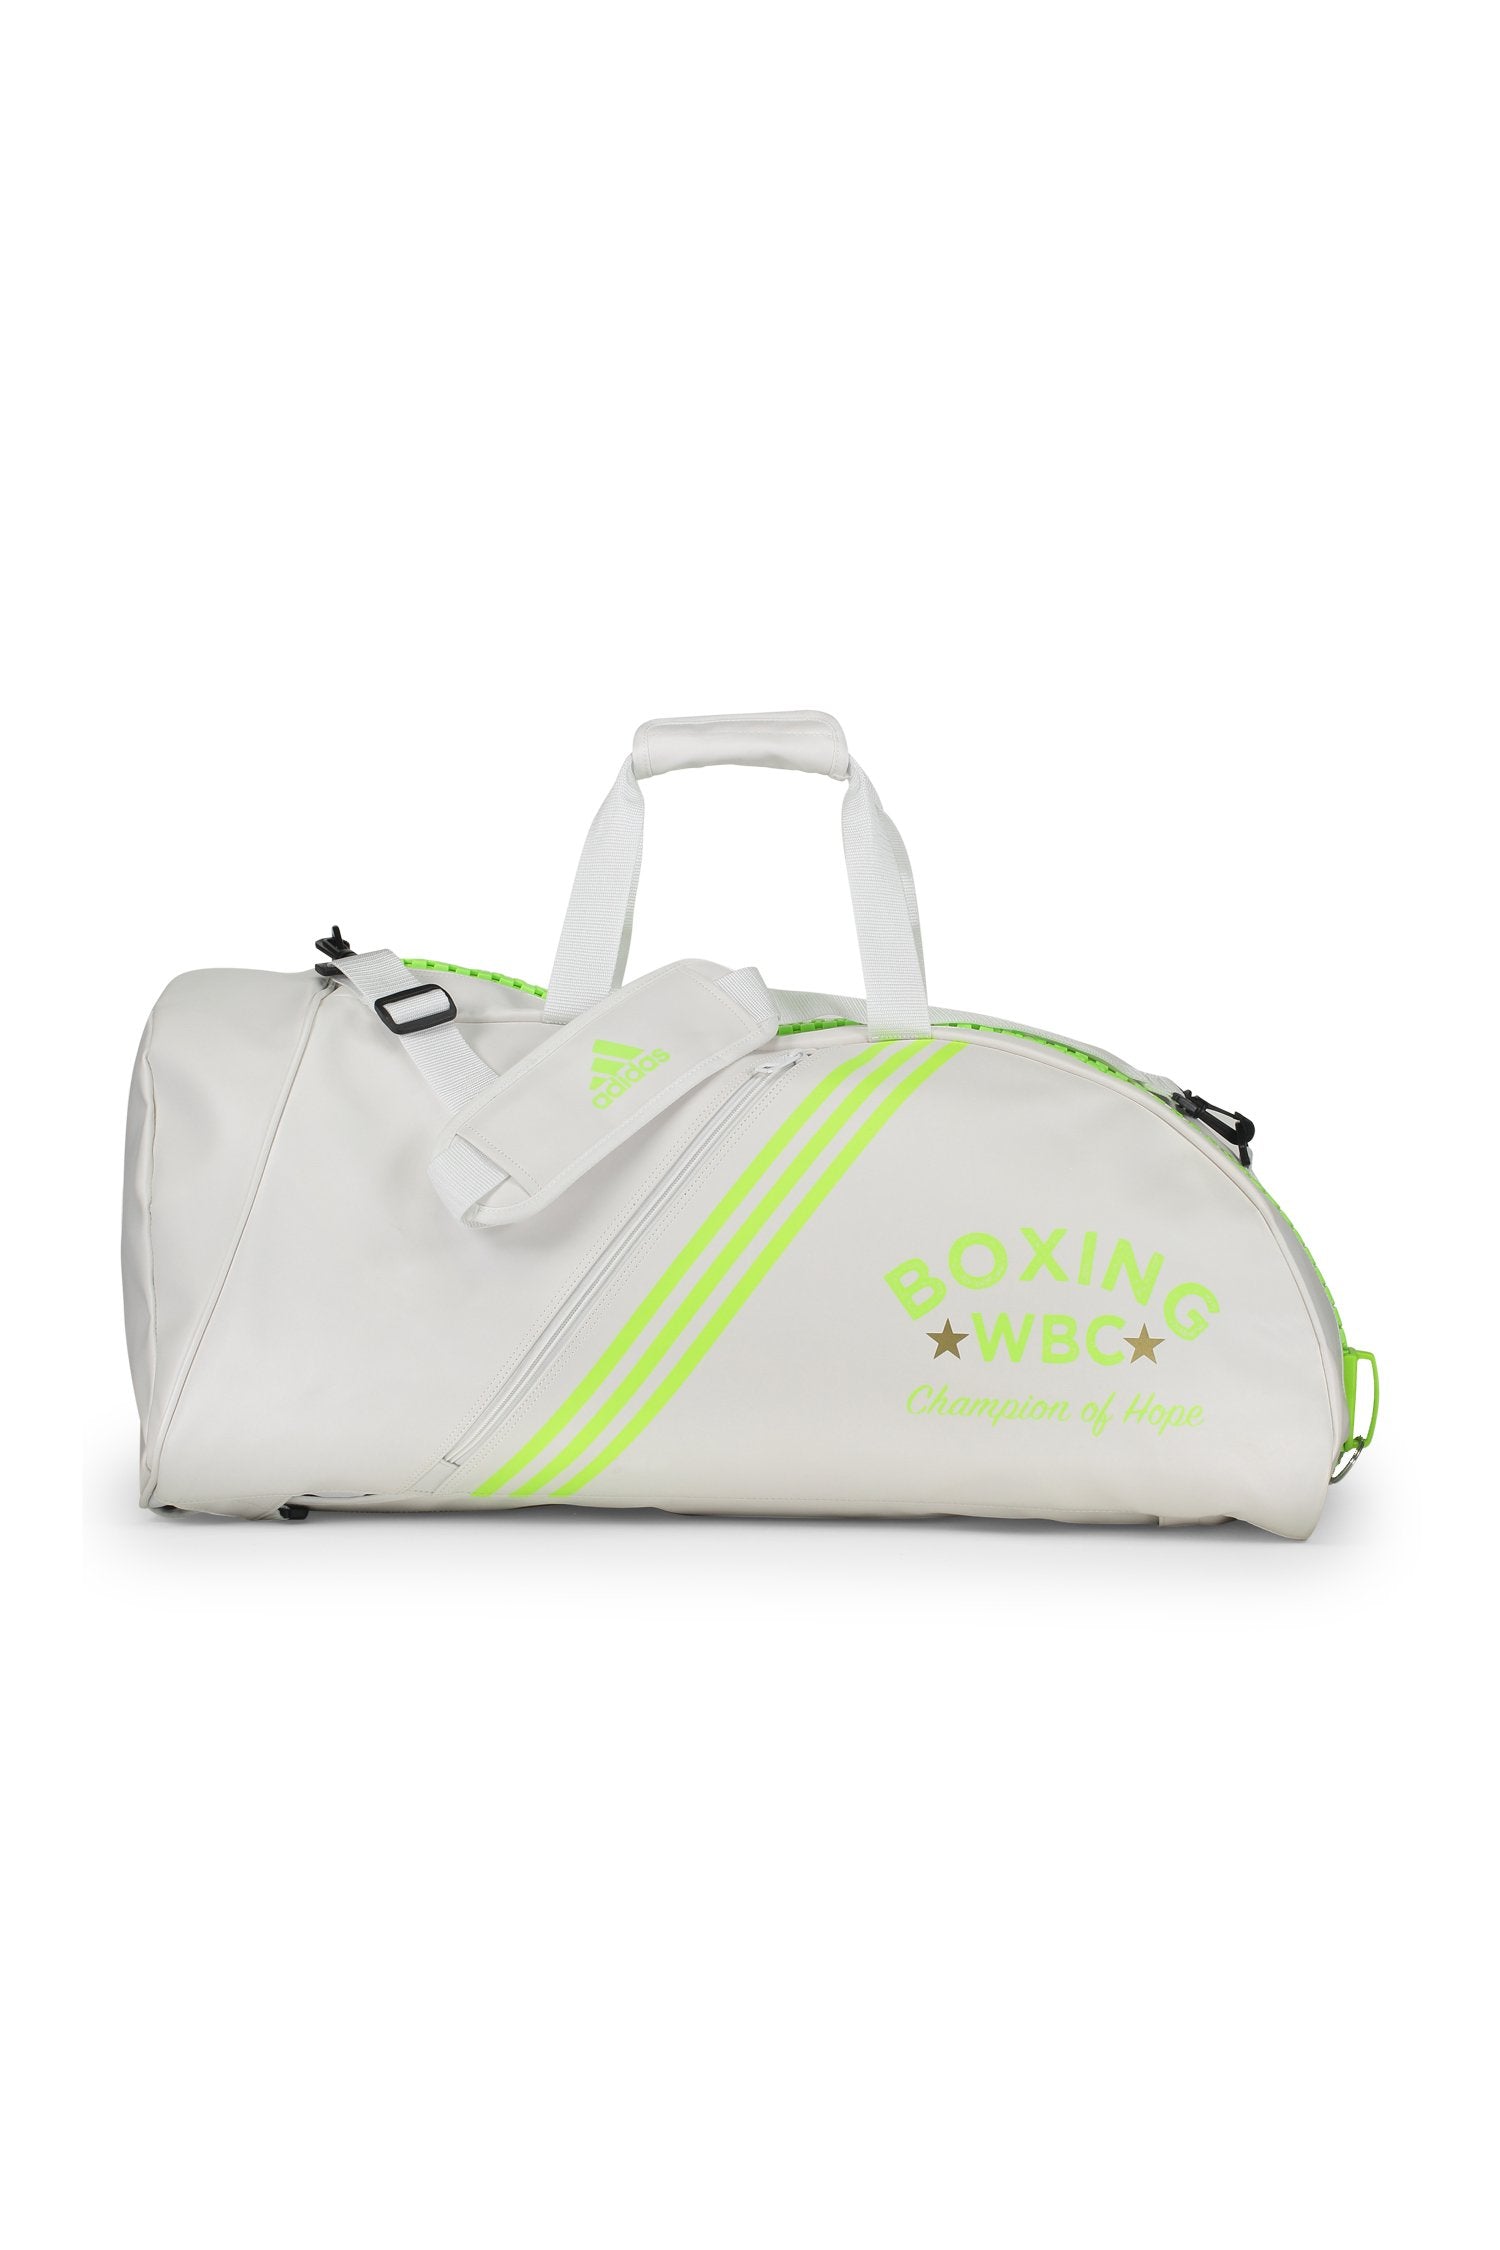 Adidas Bags Large / White WBC/Adidas Gym & Travel Bag